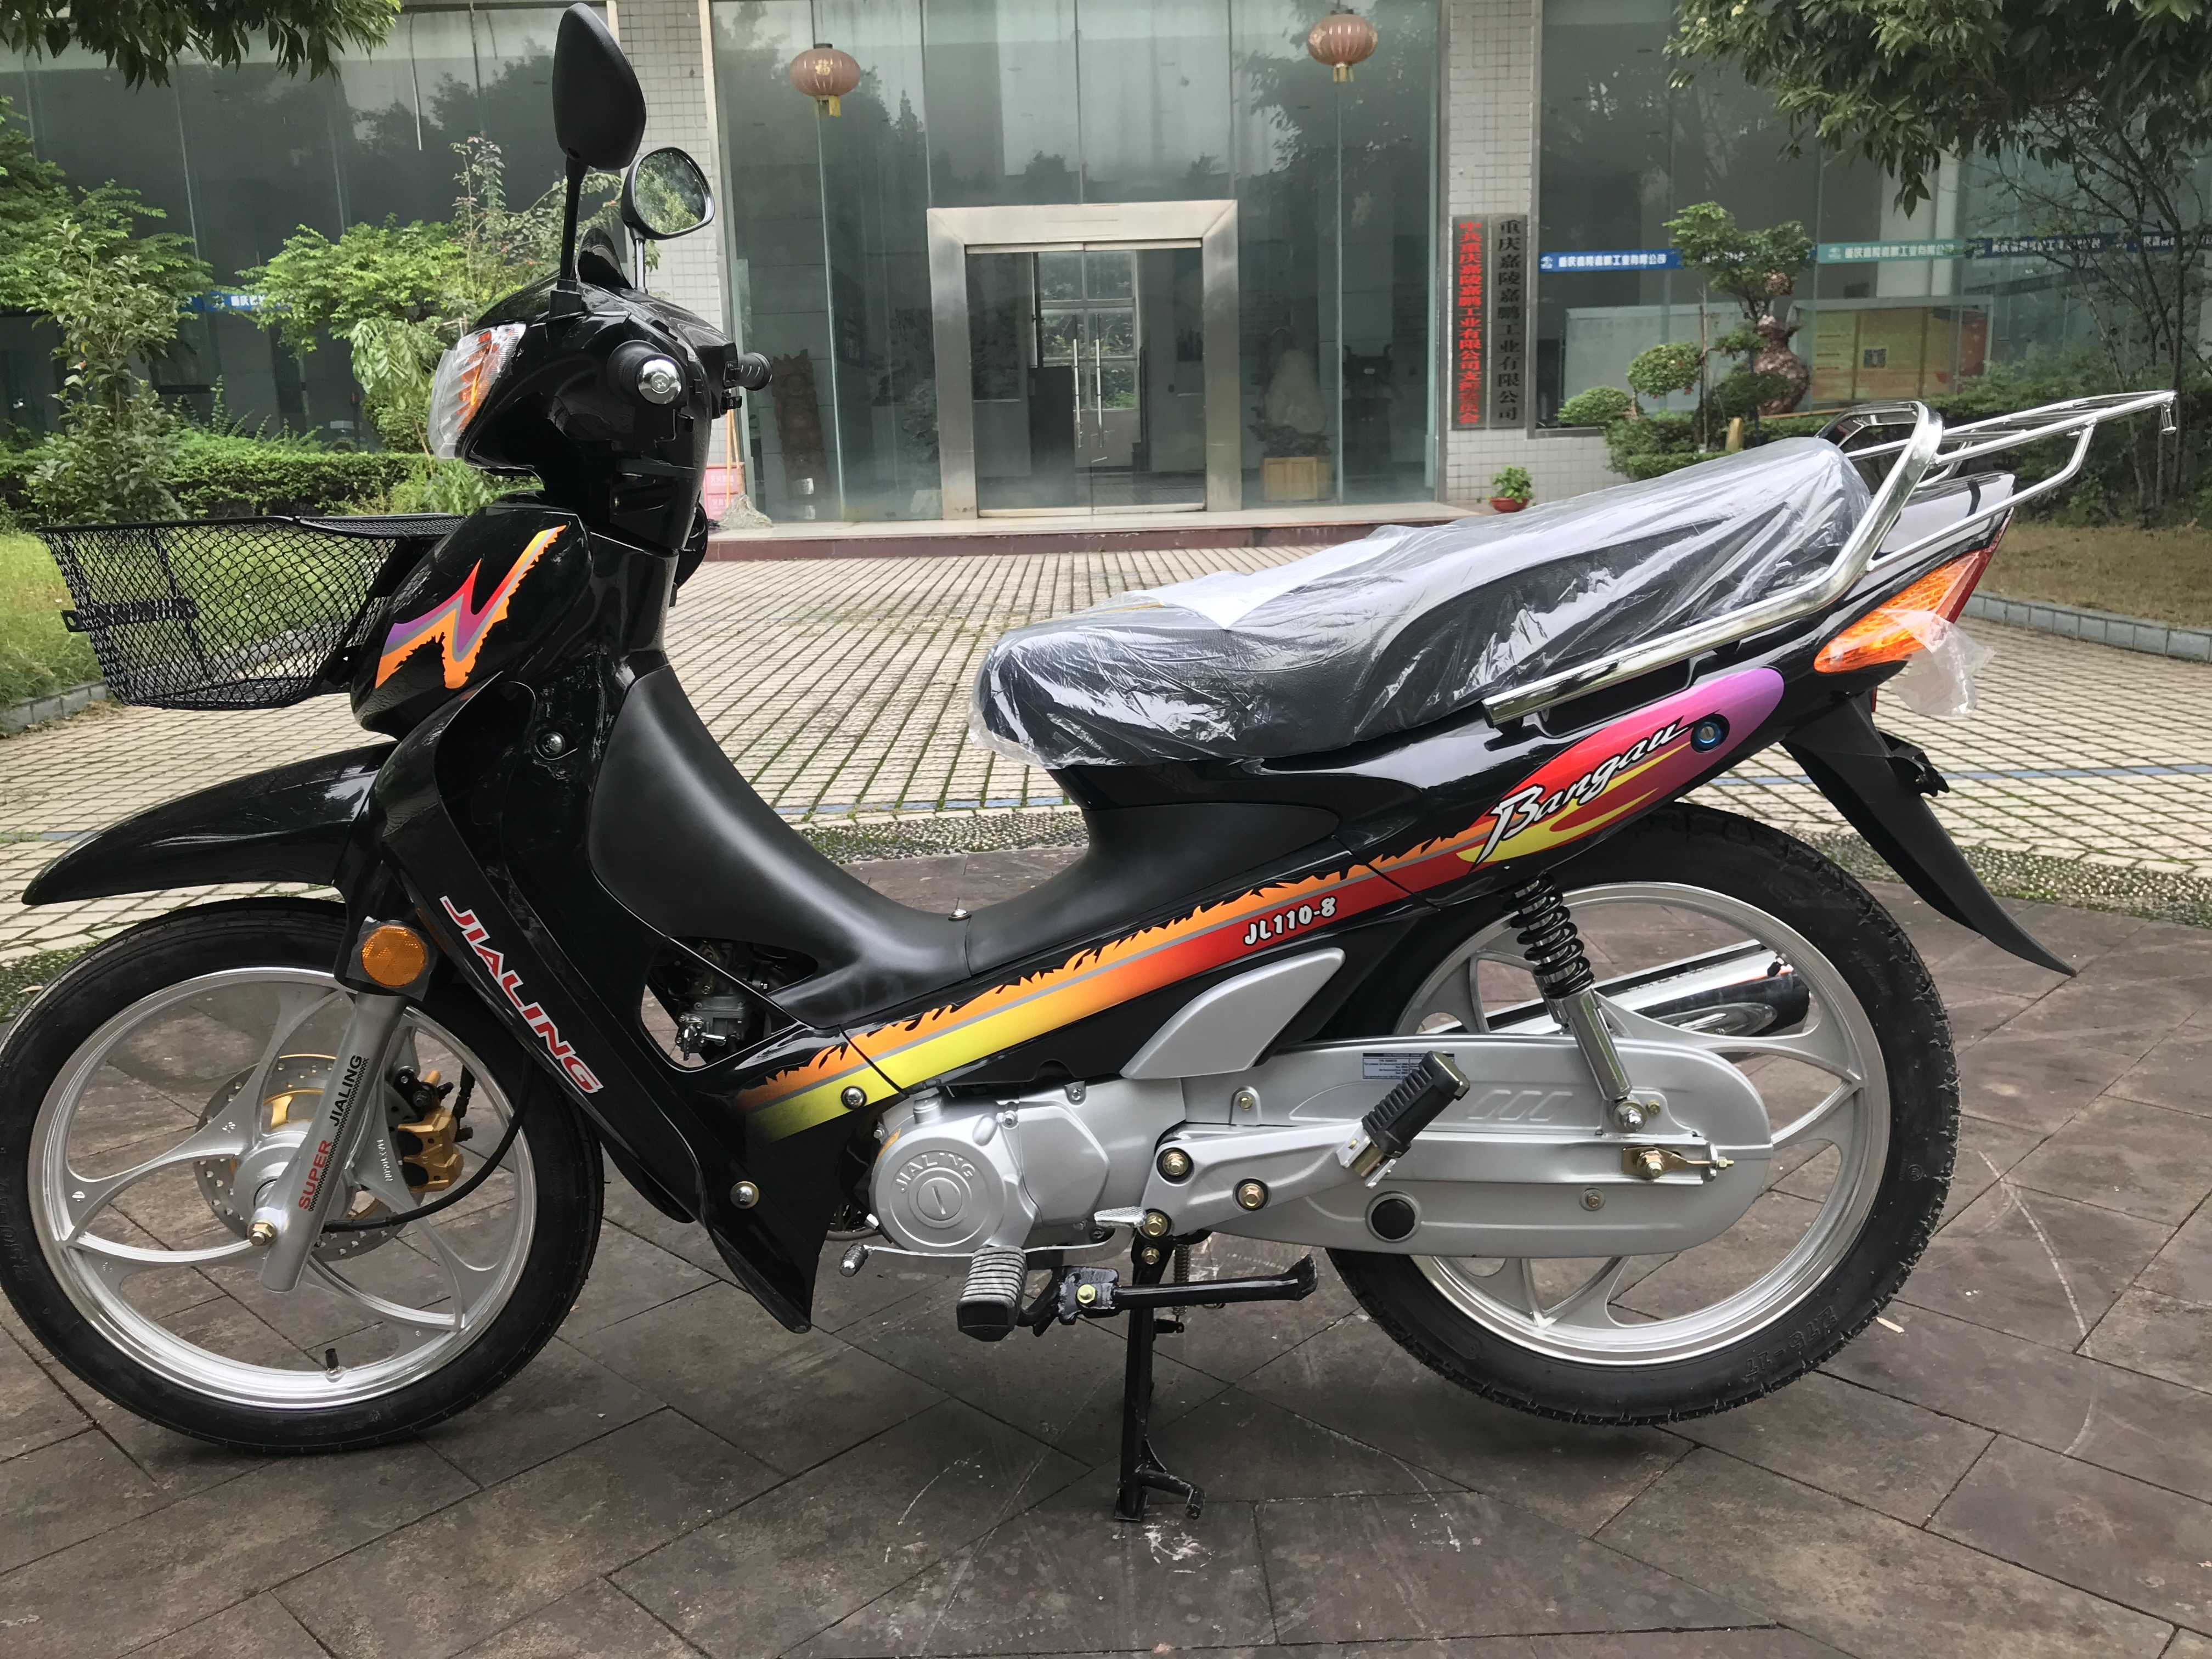 Jialing 110cc classic motorcycle